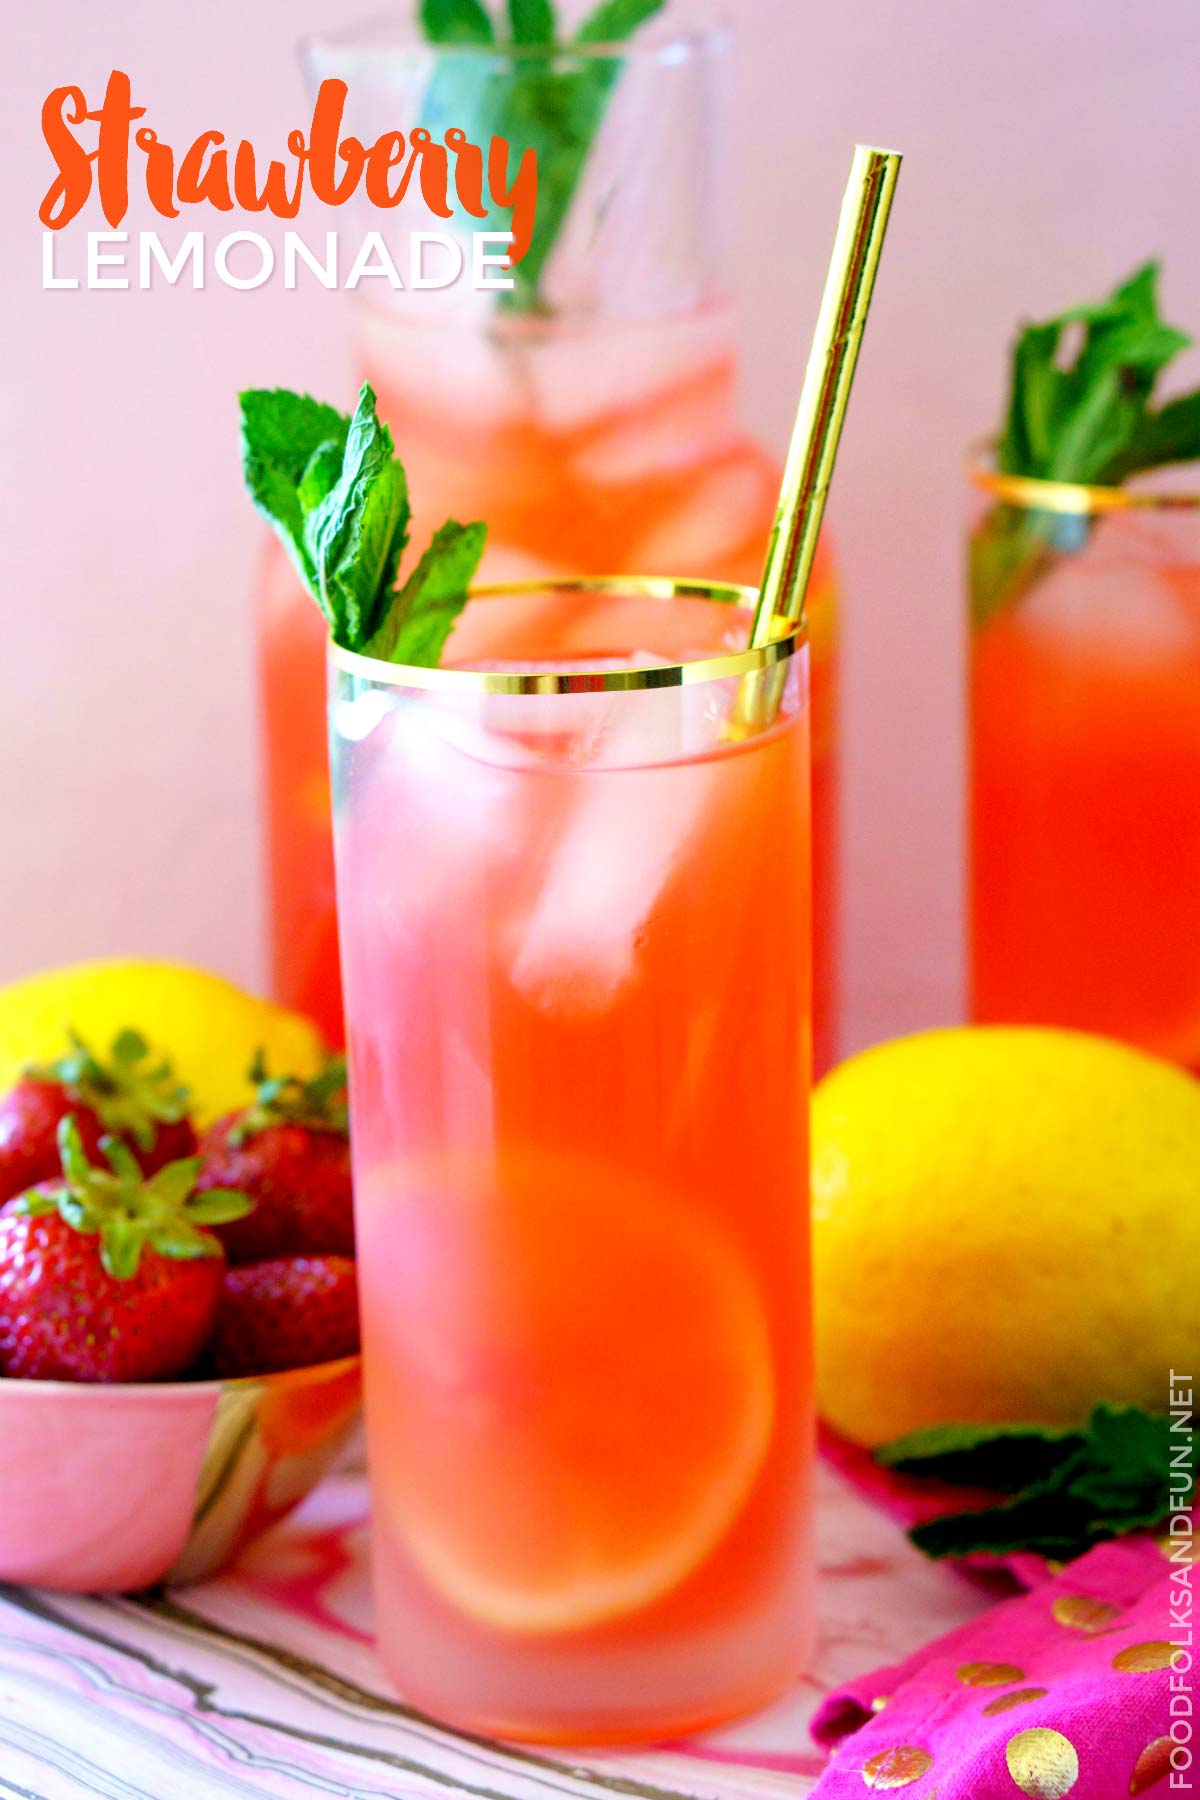 My favorite Strawberry Lemonade recipe of all time!